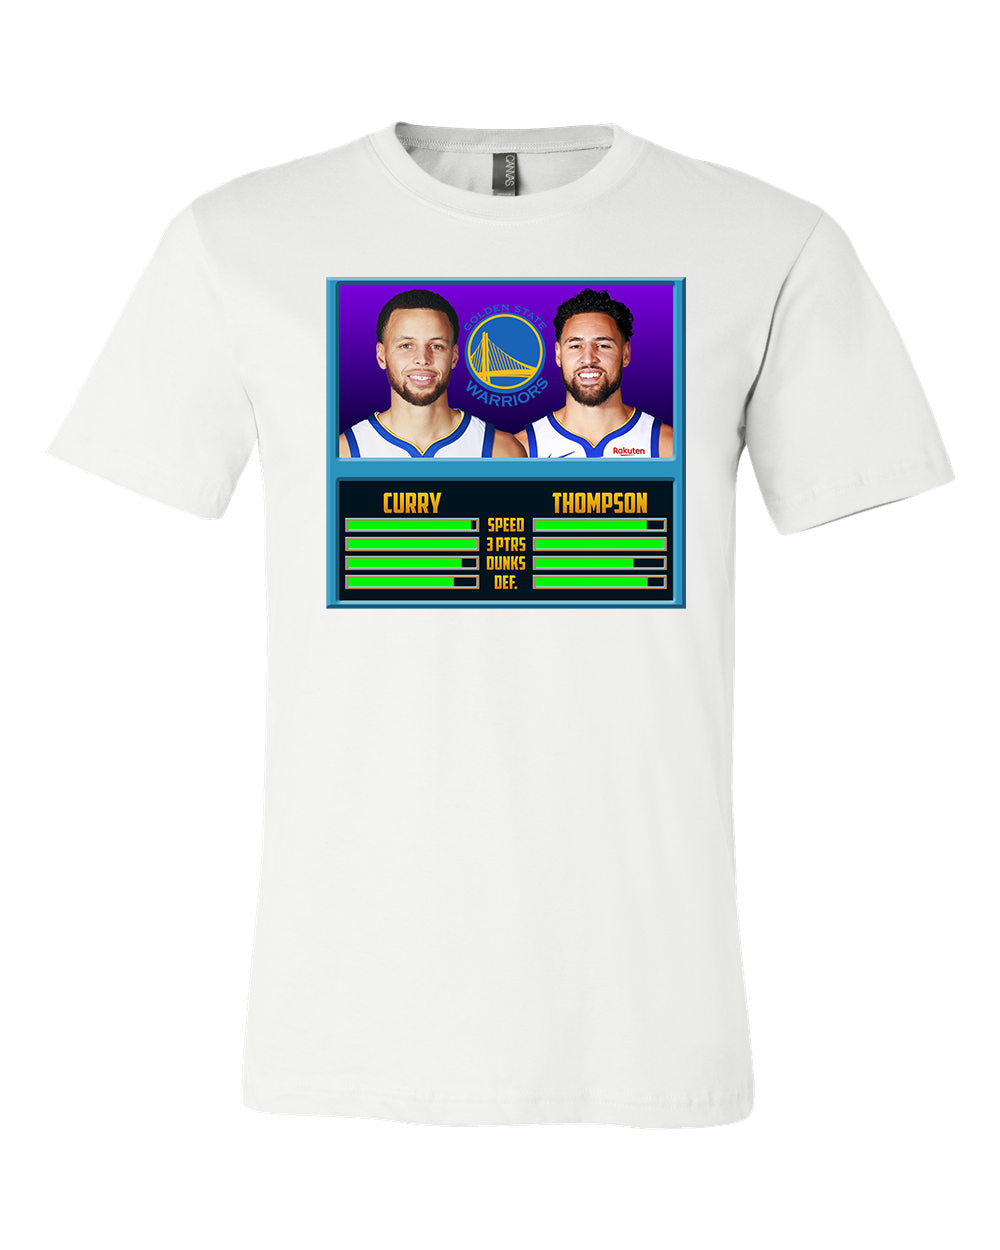 Golden State Warriors Stephen Curry Klay Thompson NBA JAM T-shirt